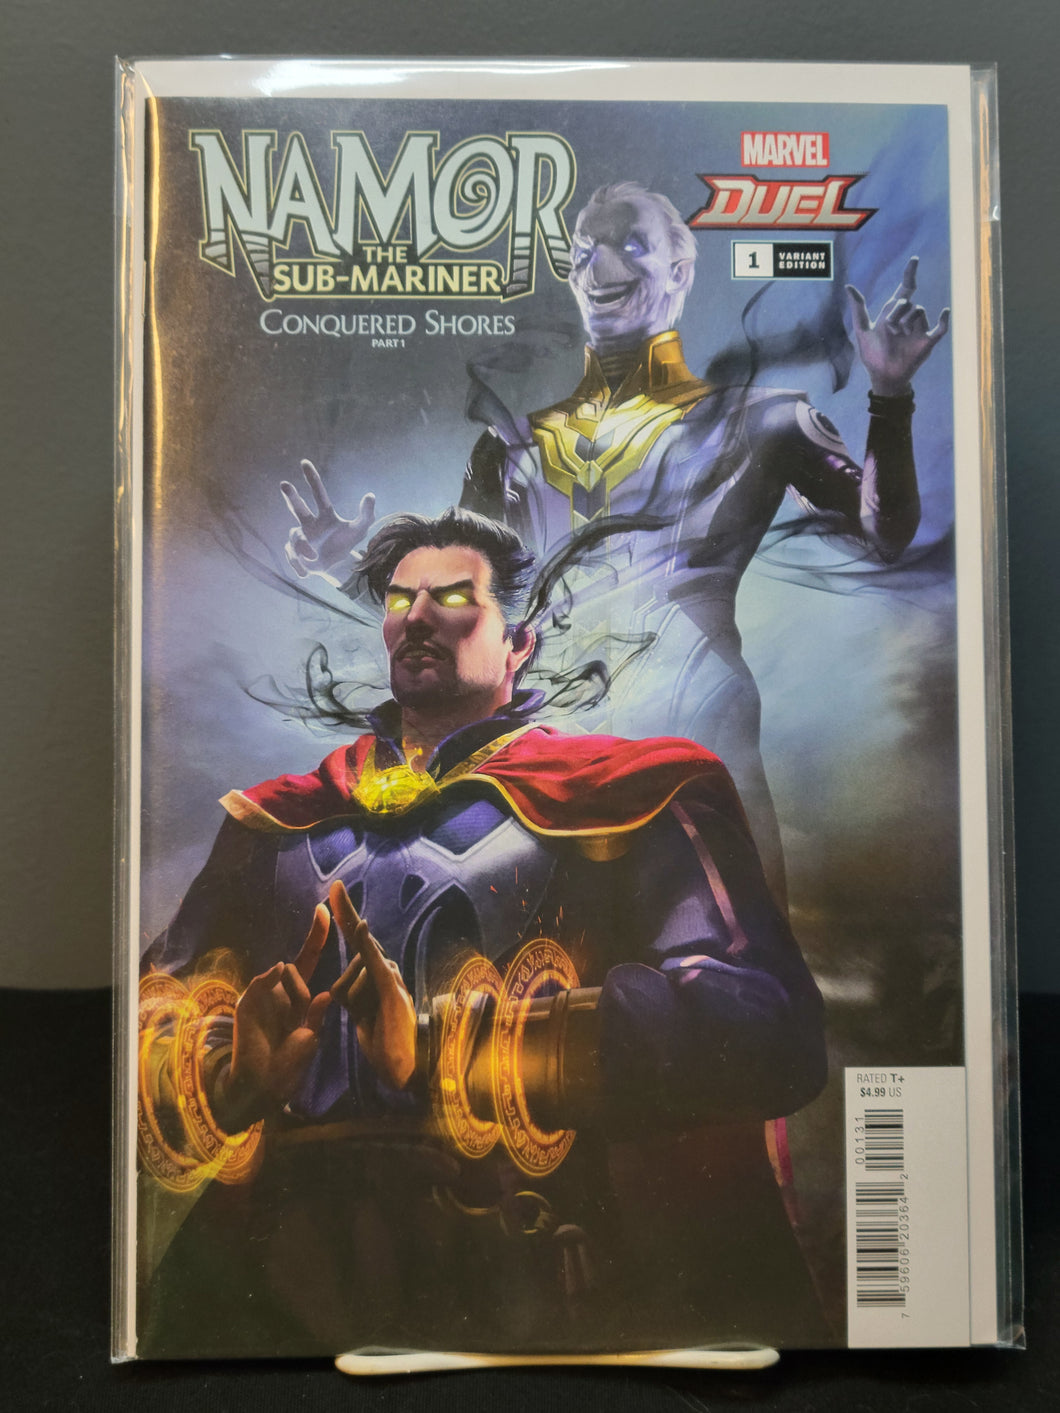 Namor The Sub-Mariner #1 Variant